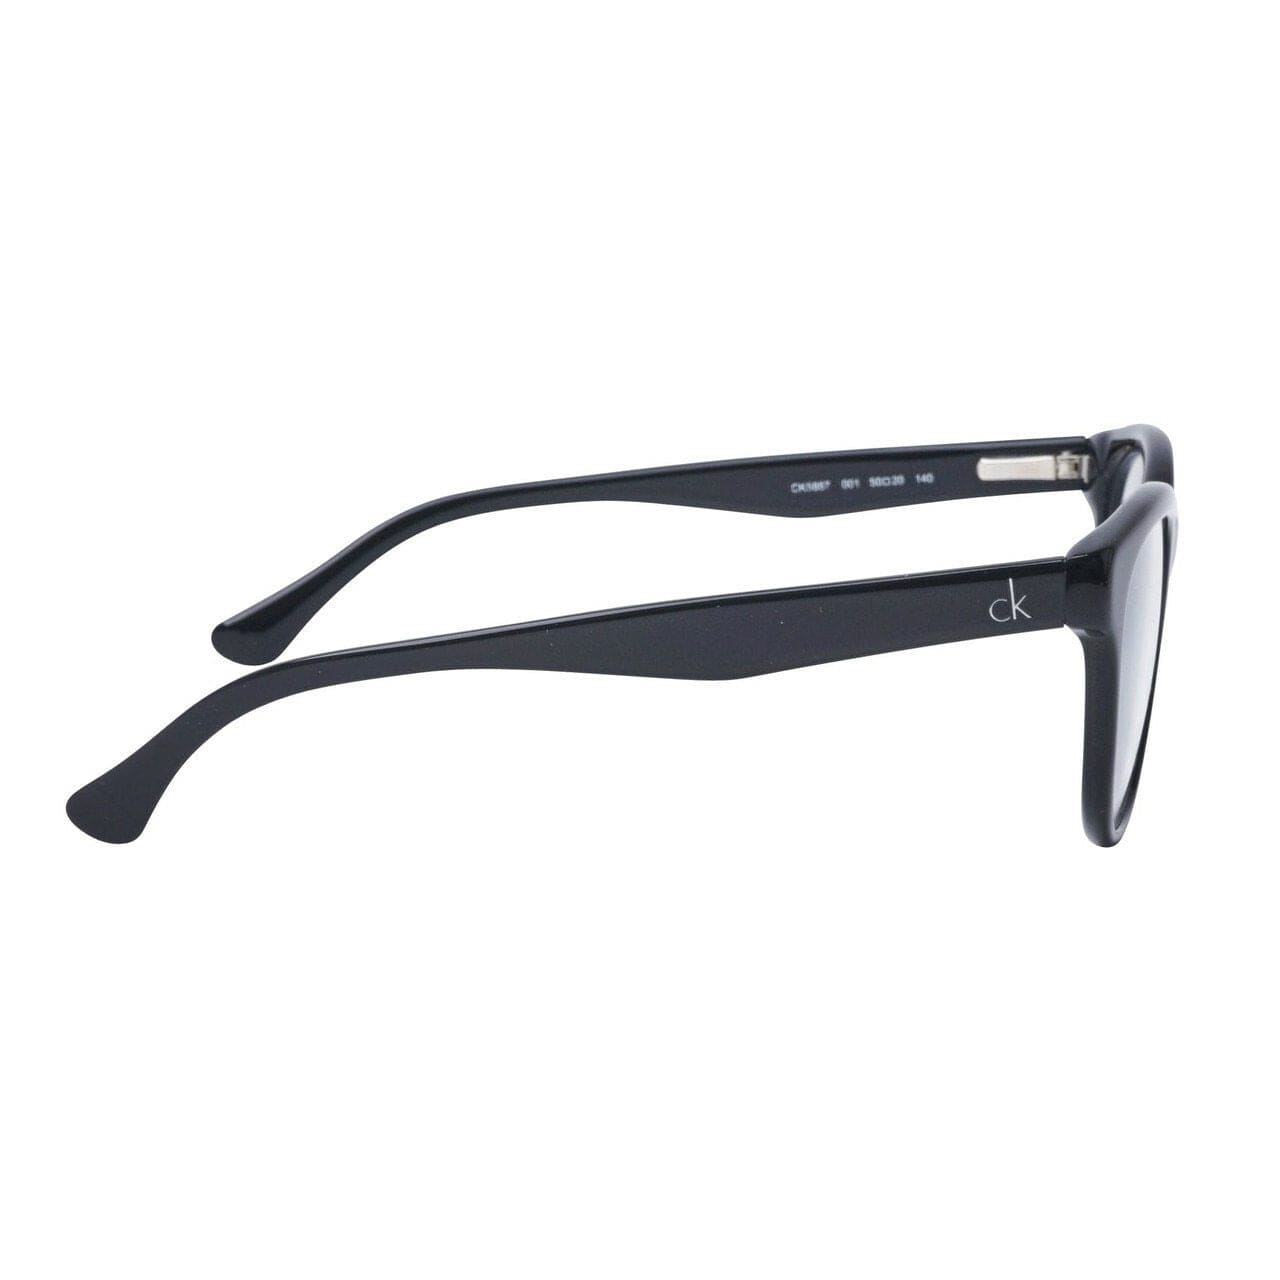 Calvin Klein CK-5887-001 Black Round Unisex Plastic Eyeglasses 750779084878